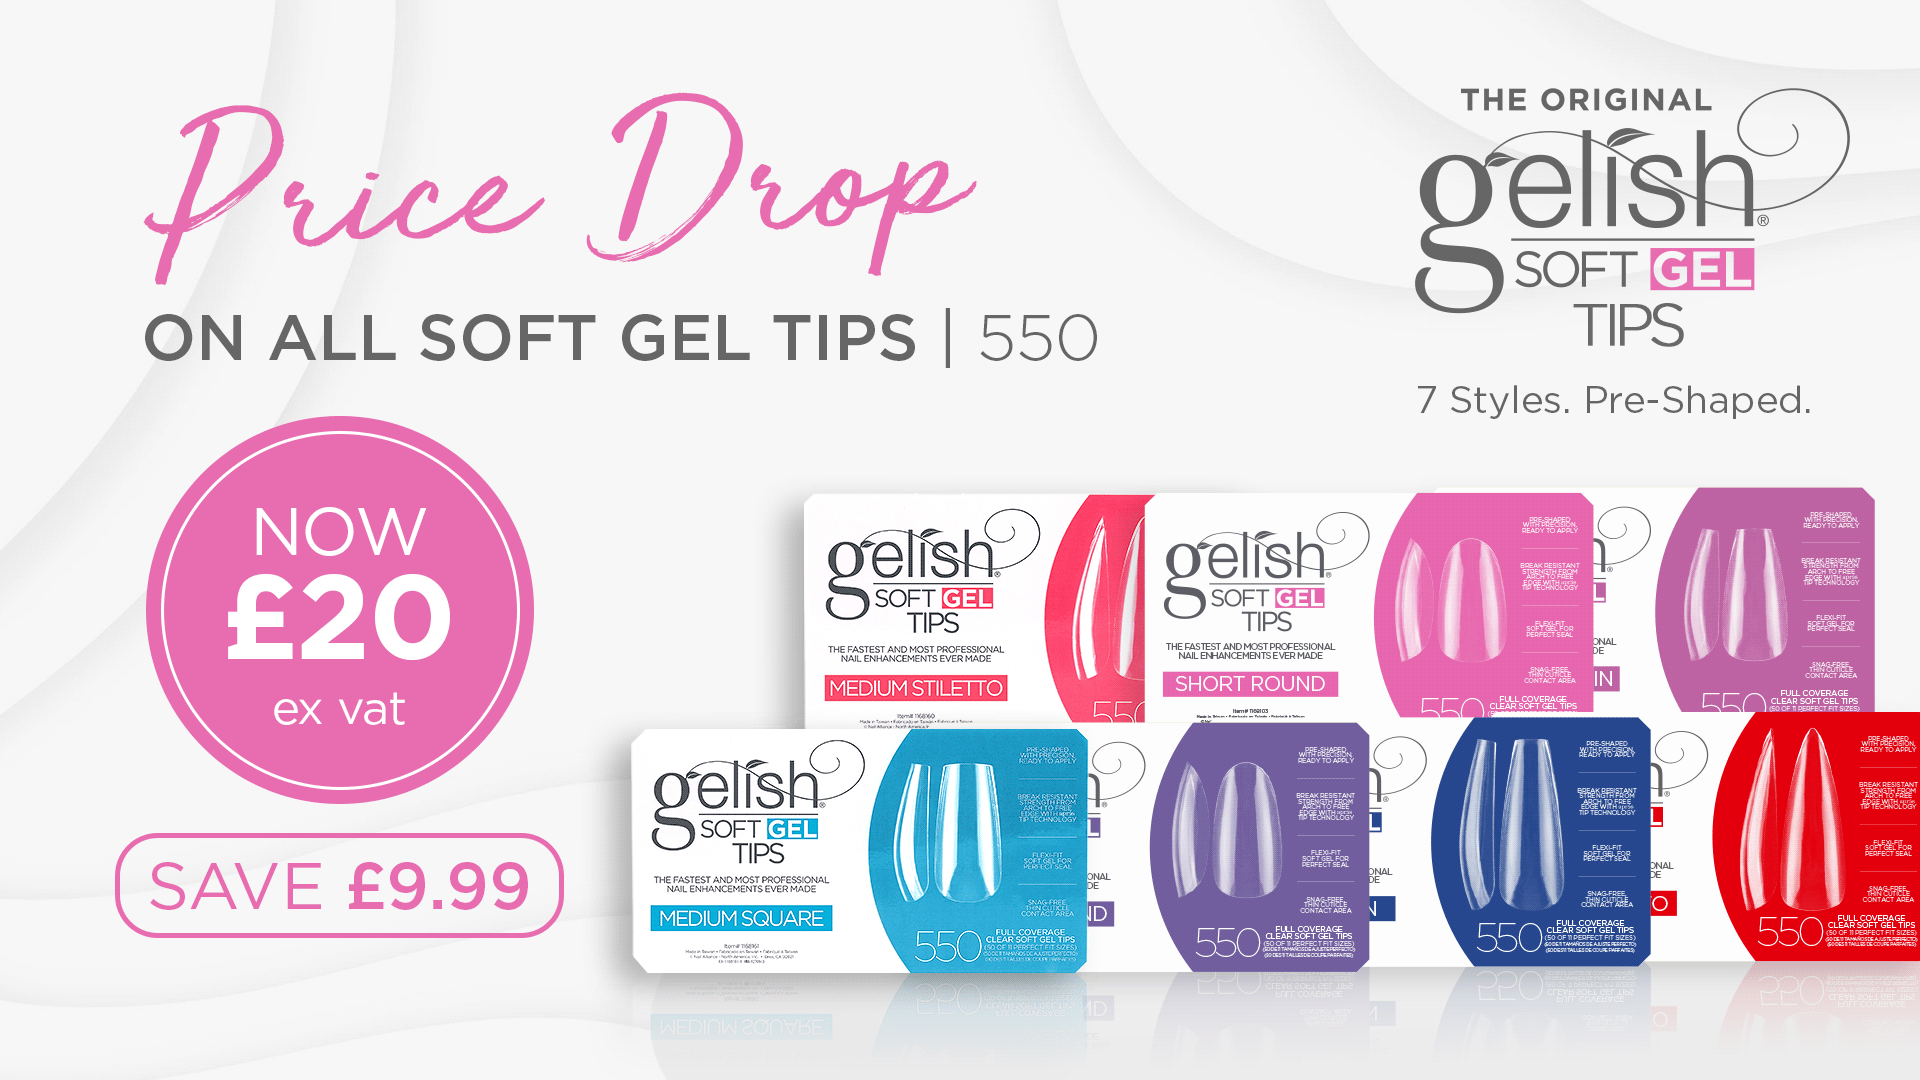 Gelish Soft Gel Tips - Price Drop